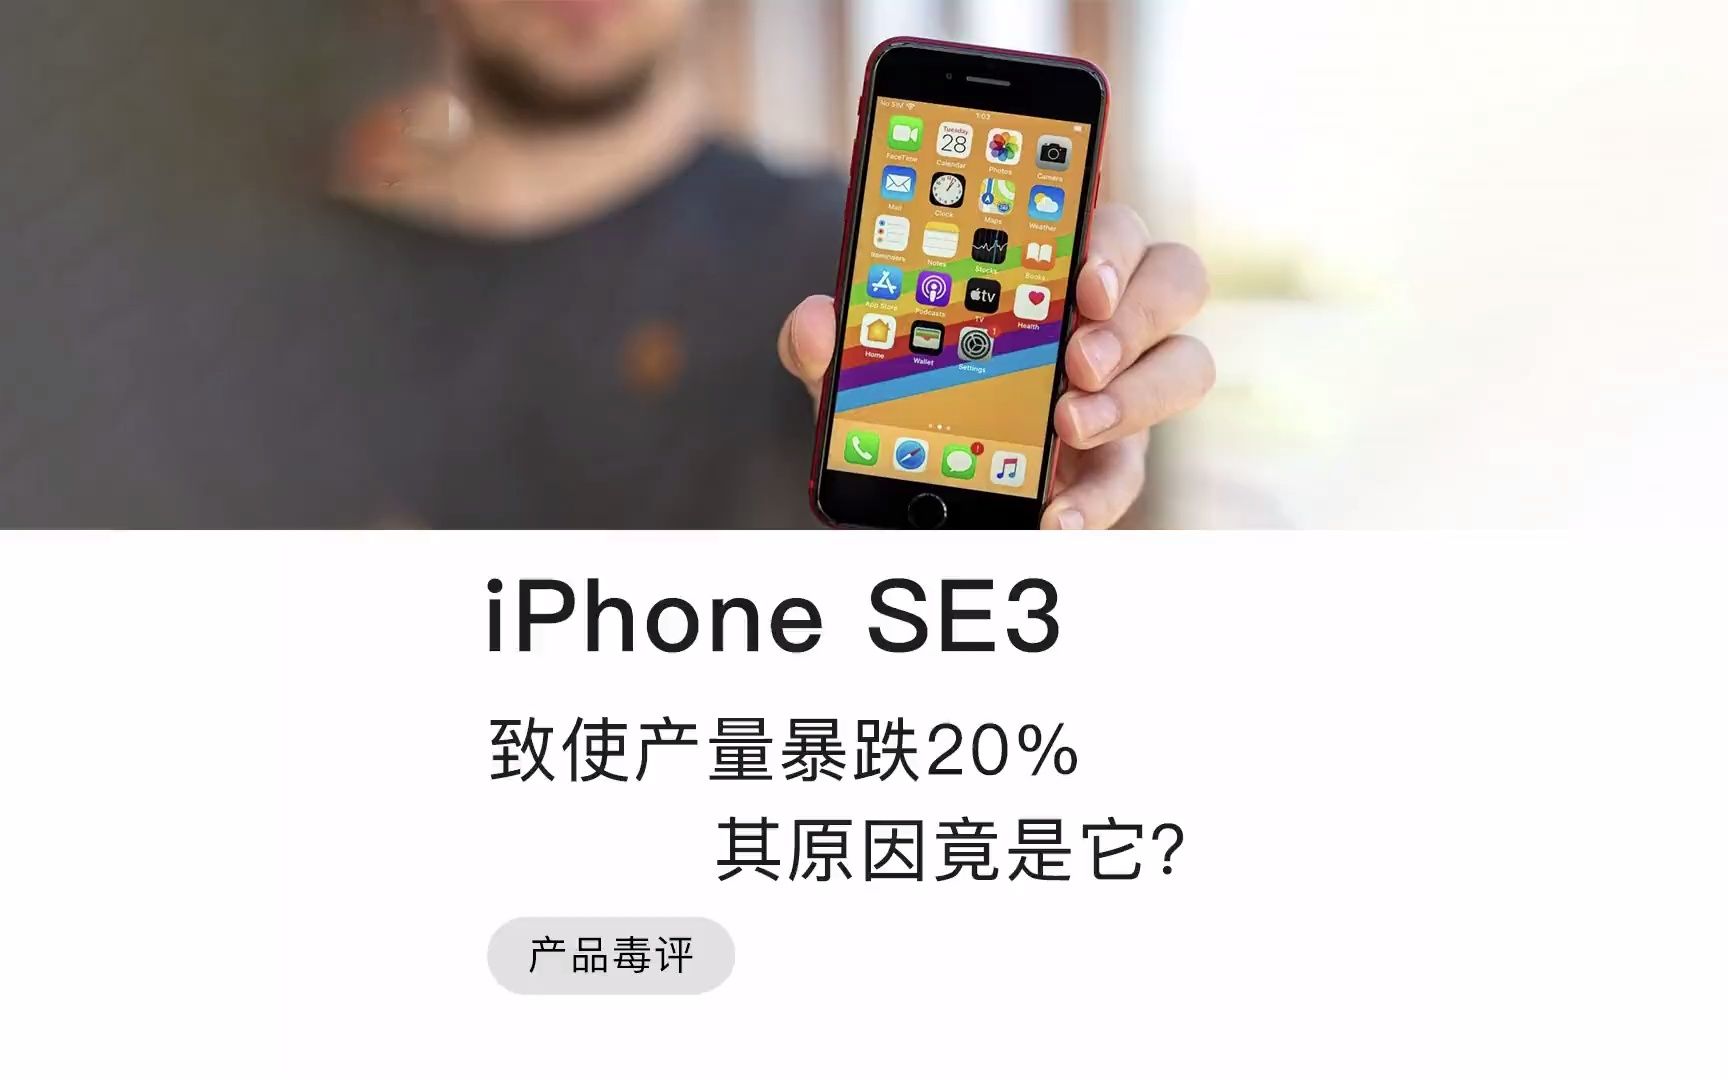 iPhoneSE3 产量减少20% 就已经证明了它的这些的问题！